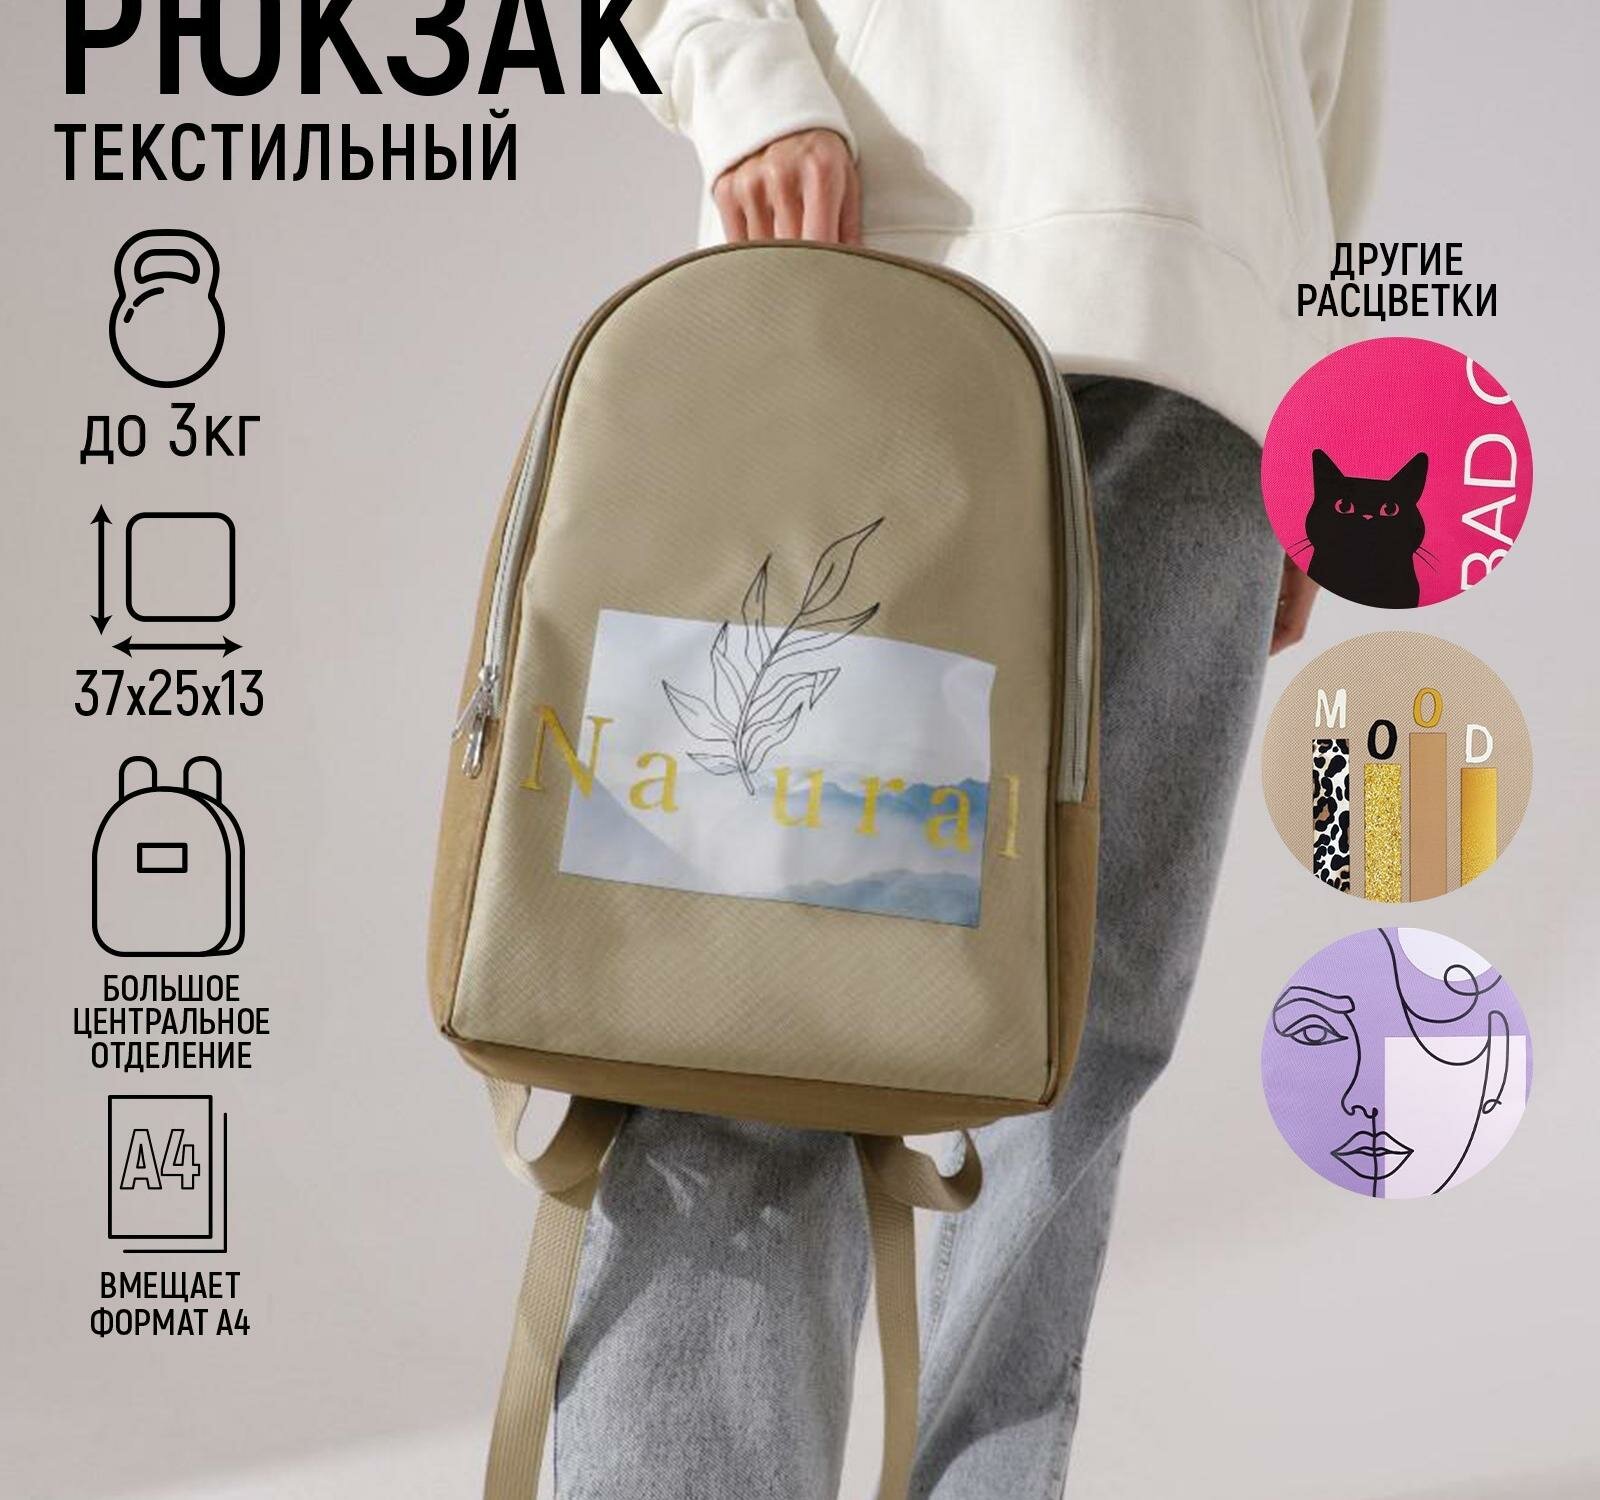 Рюкзак текстильный "Natural", 25х13х37 см, бежевый